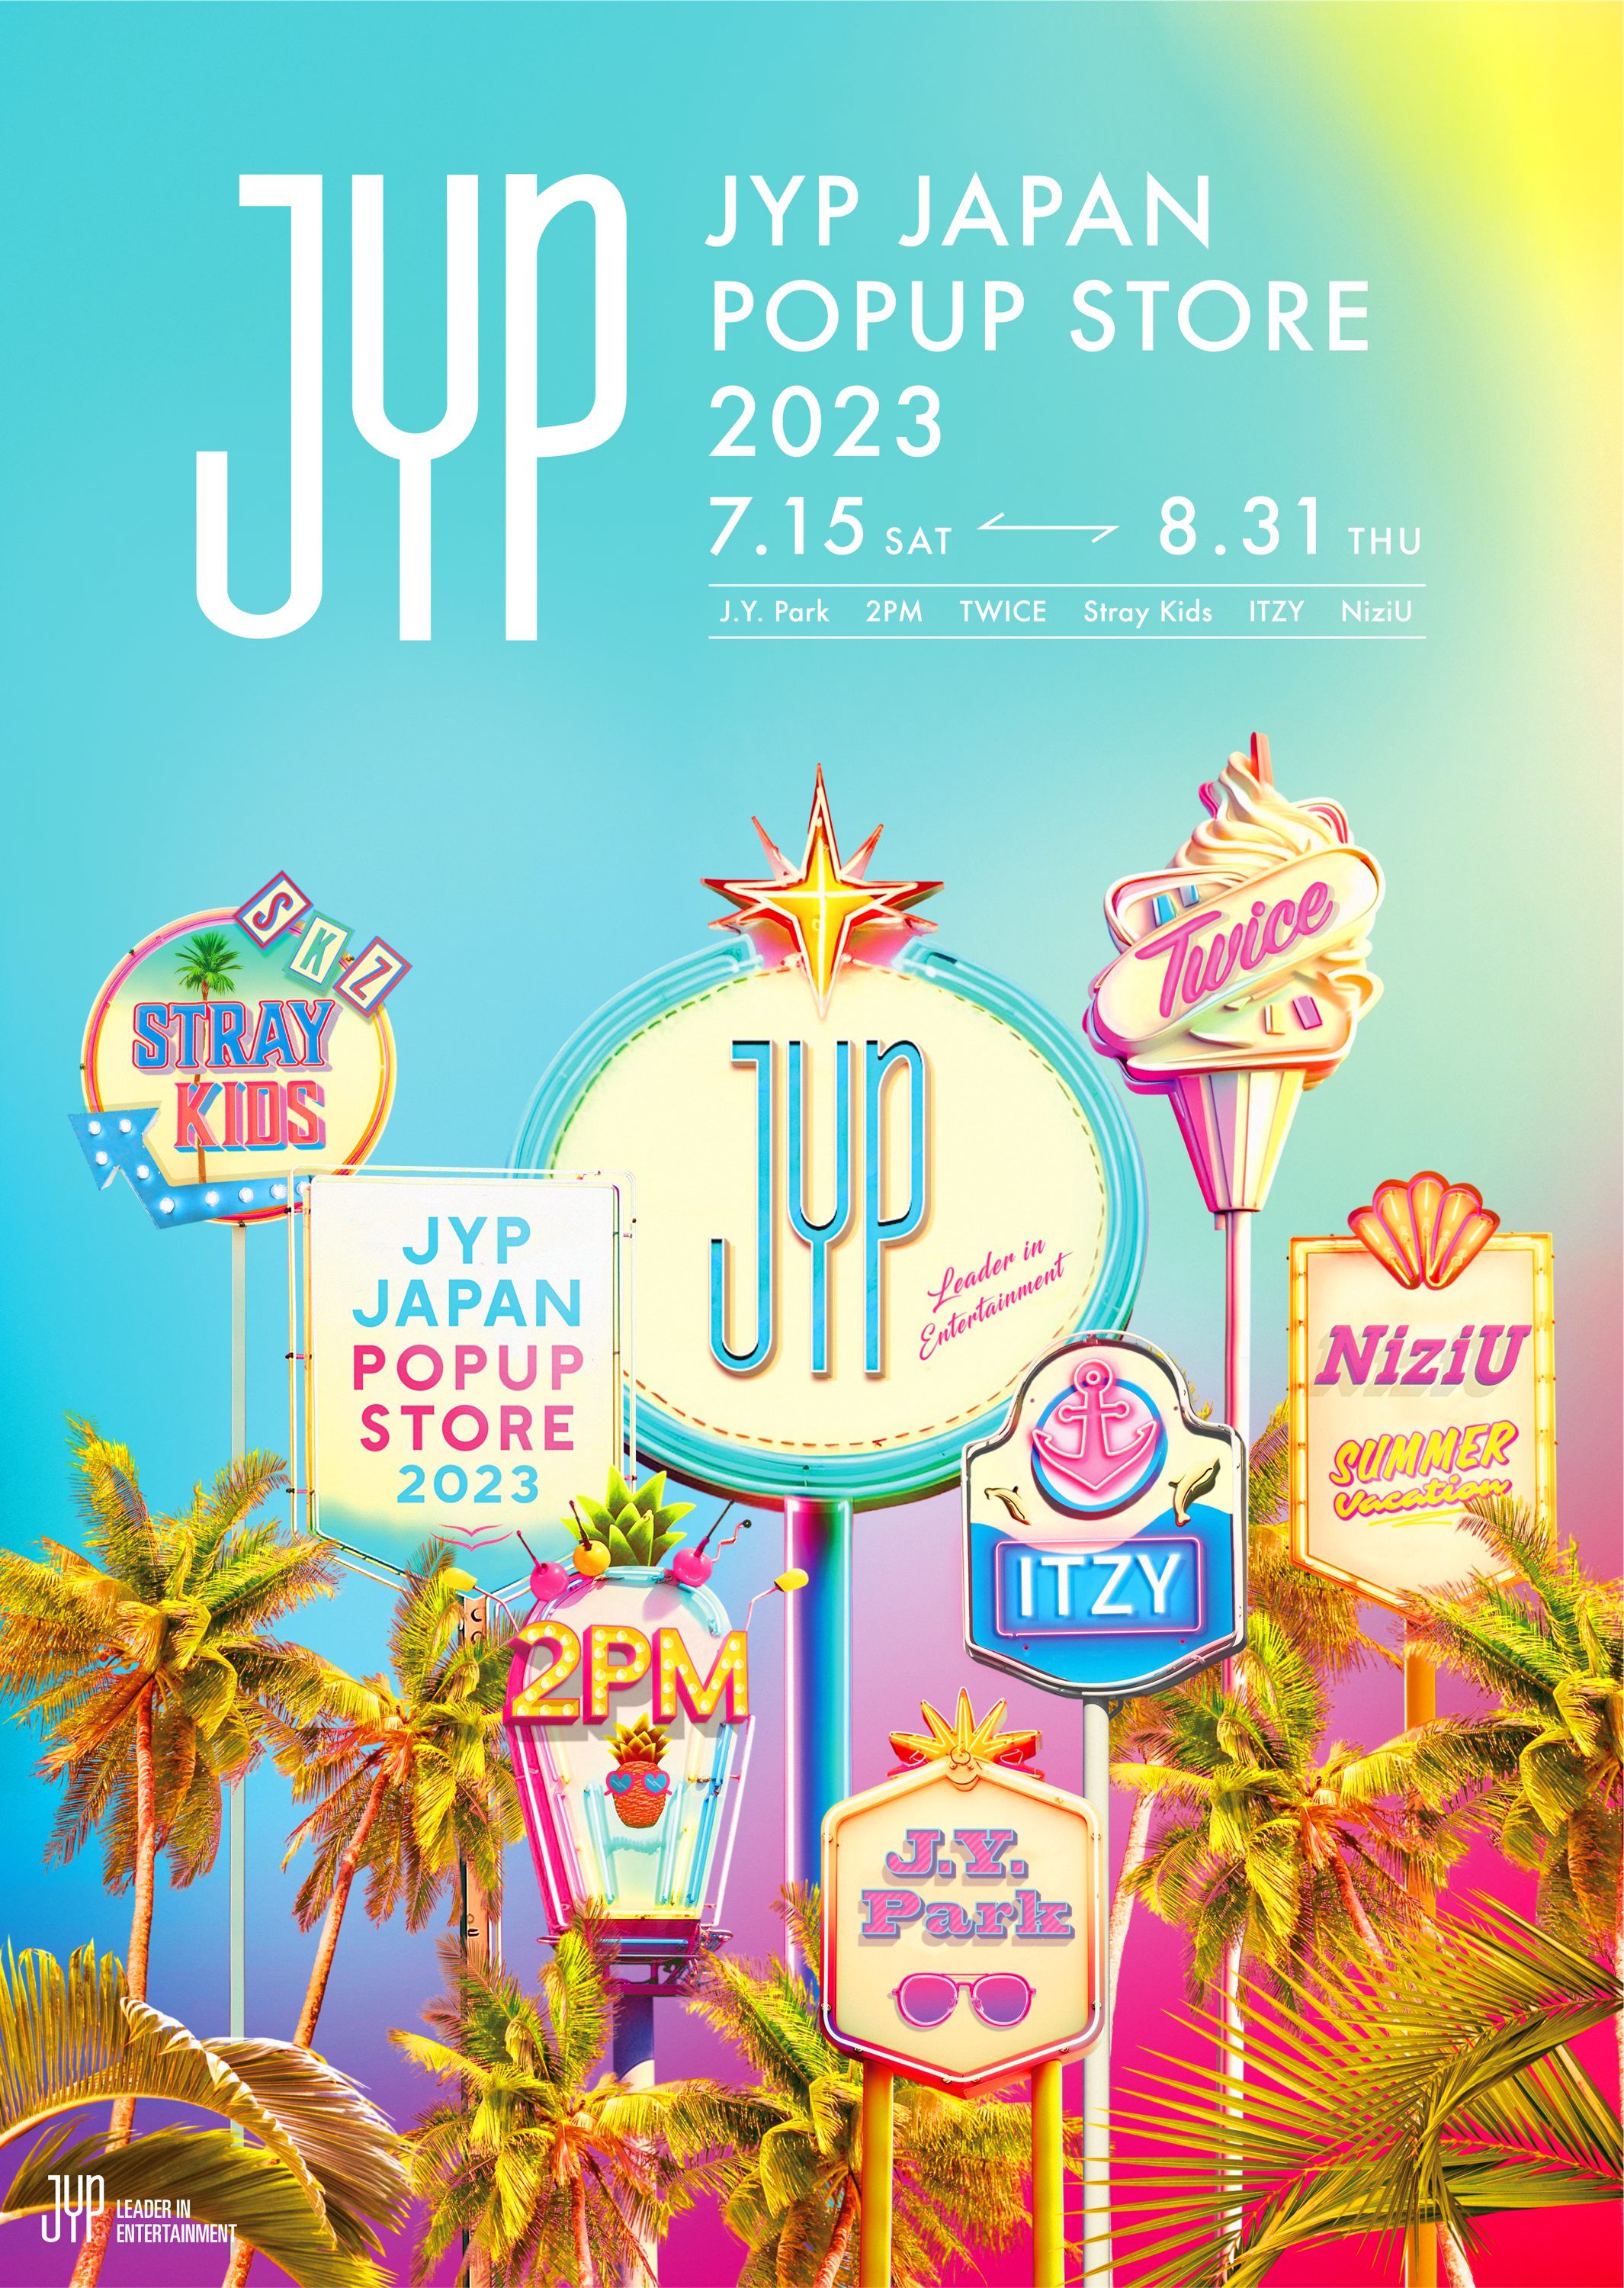 JYP JAPAN POPUP STORE 2023